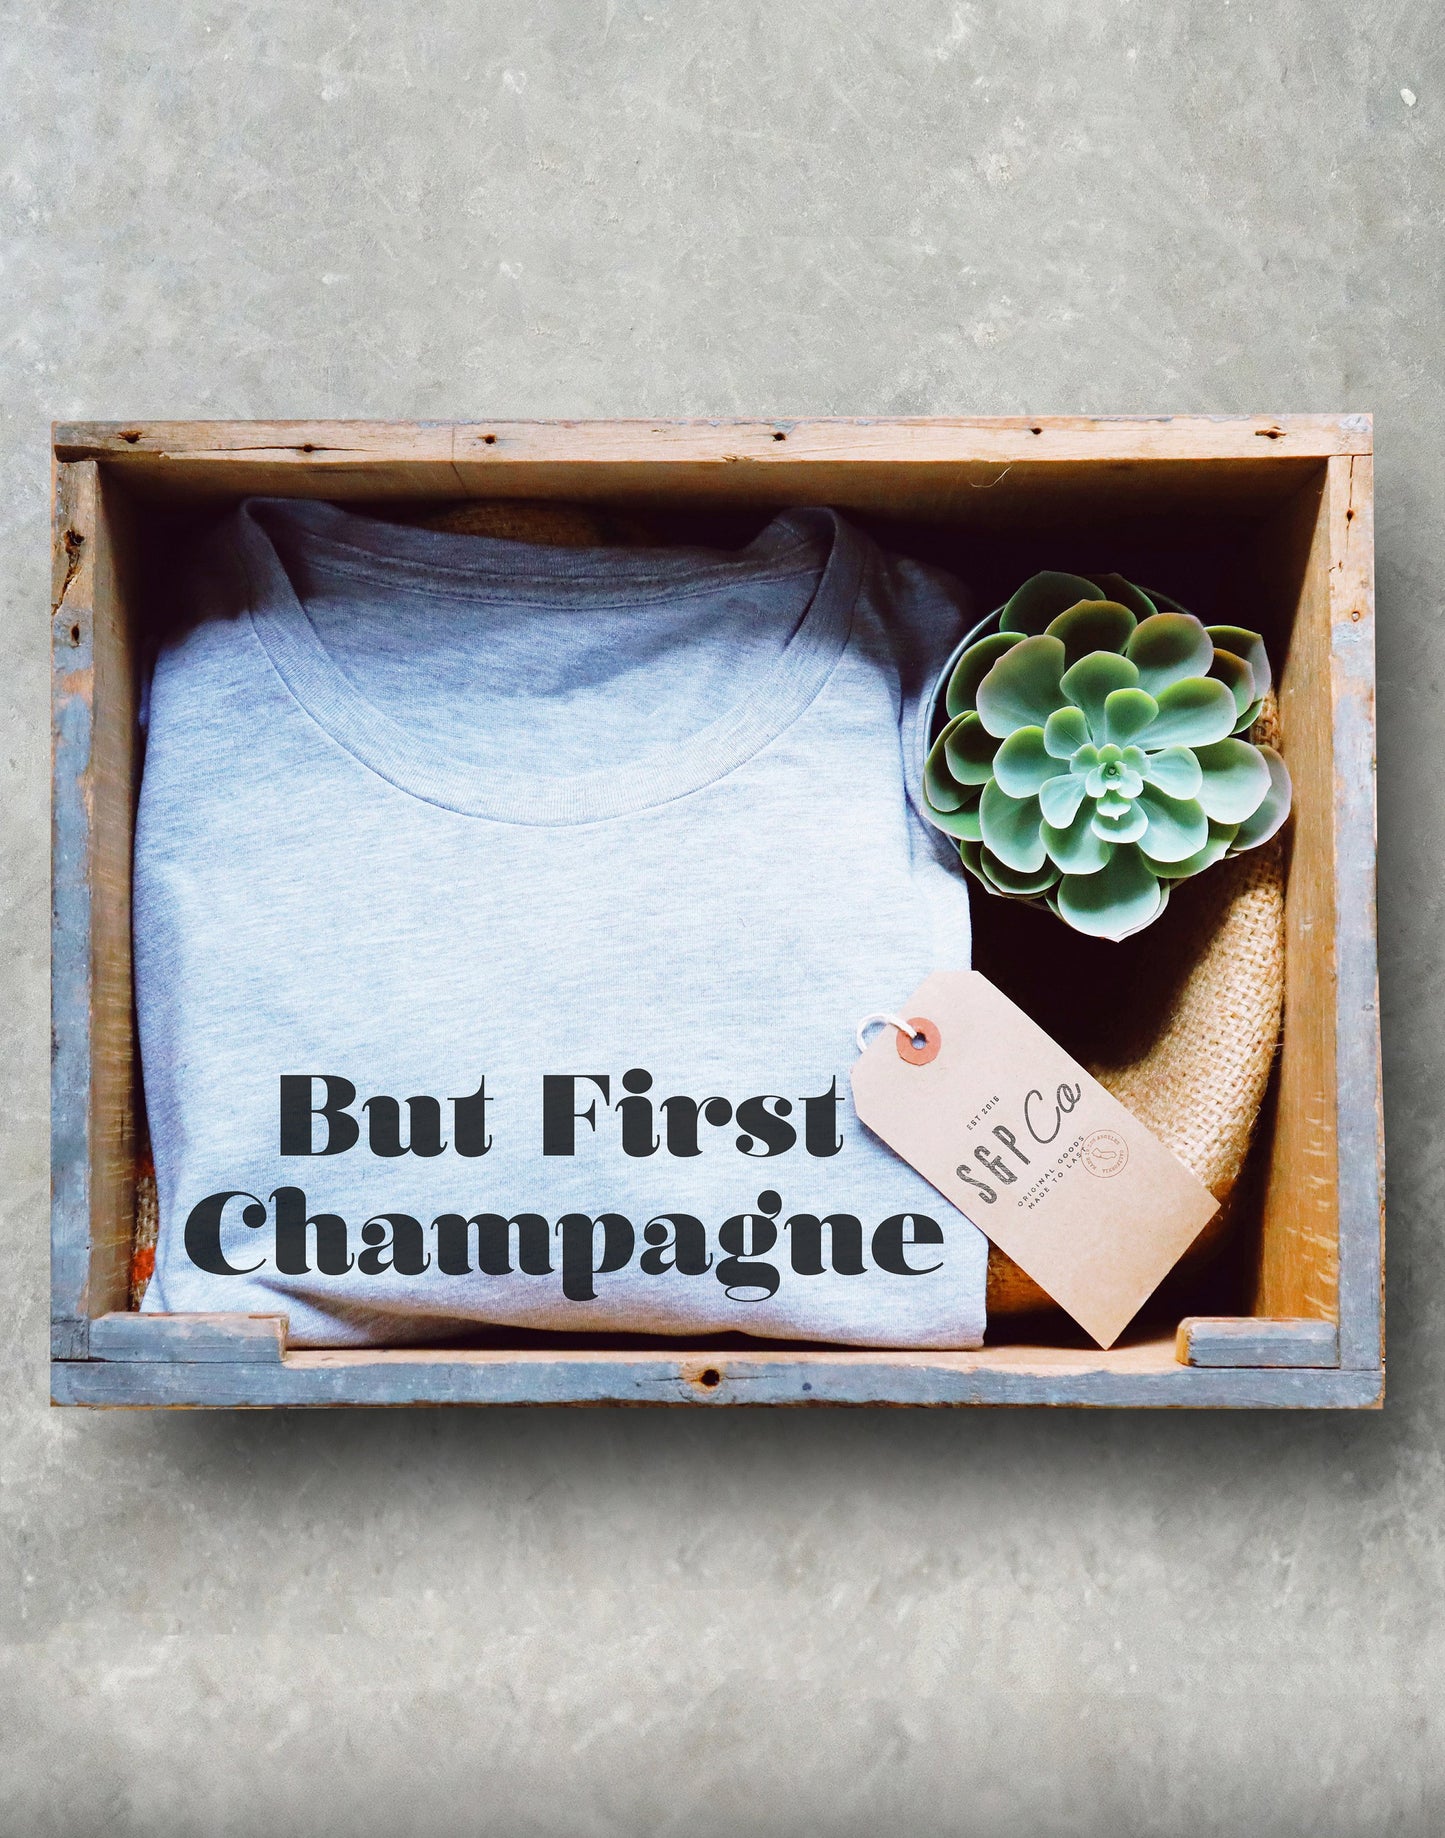 But First Champagne Unisex Shirt-Champagne Shirt, Drunk Shirt, Bride Shirt, Bridal Shower Gift, Wine Shirt, Bachelorette Party, Brunch Shirt